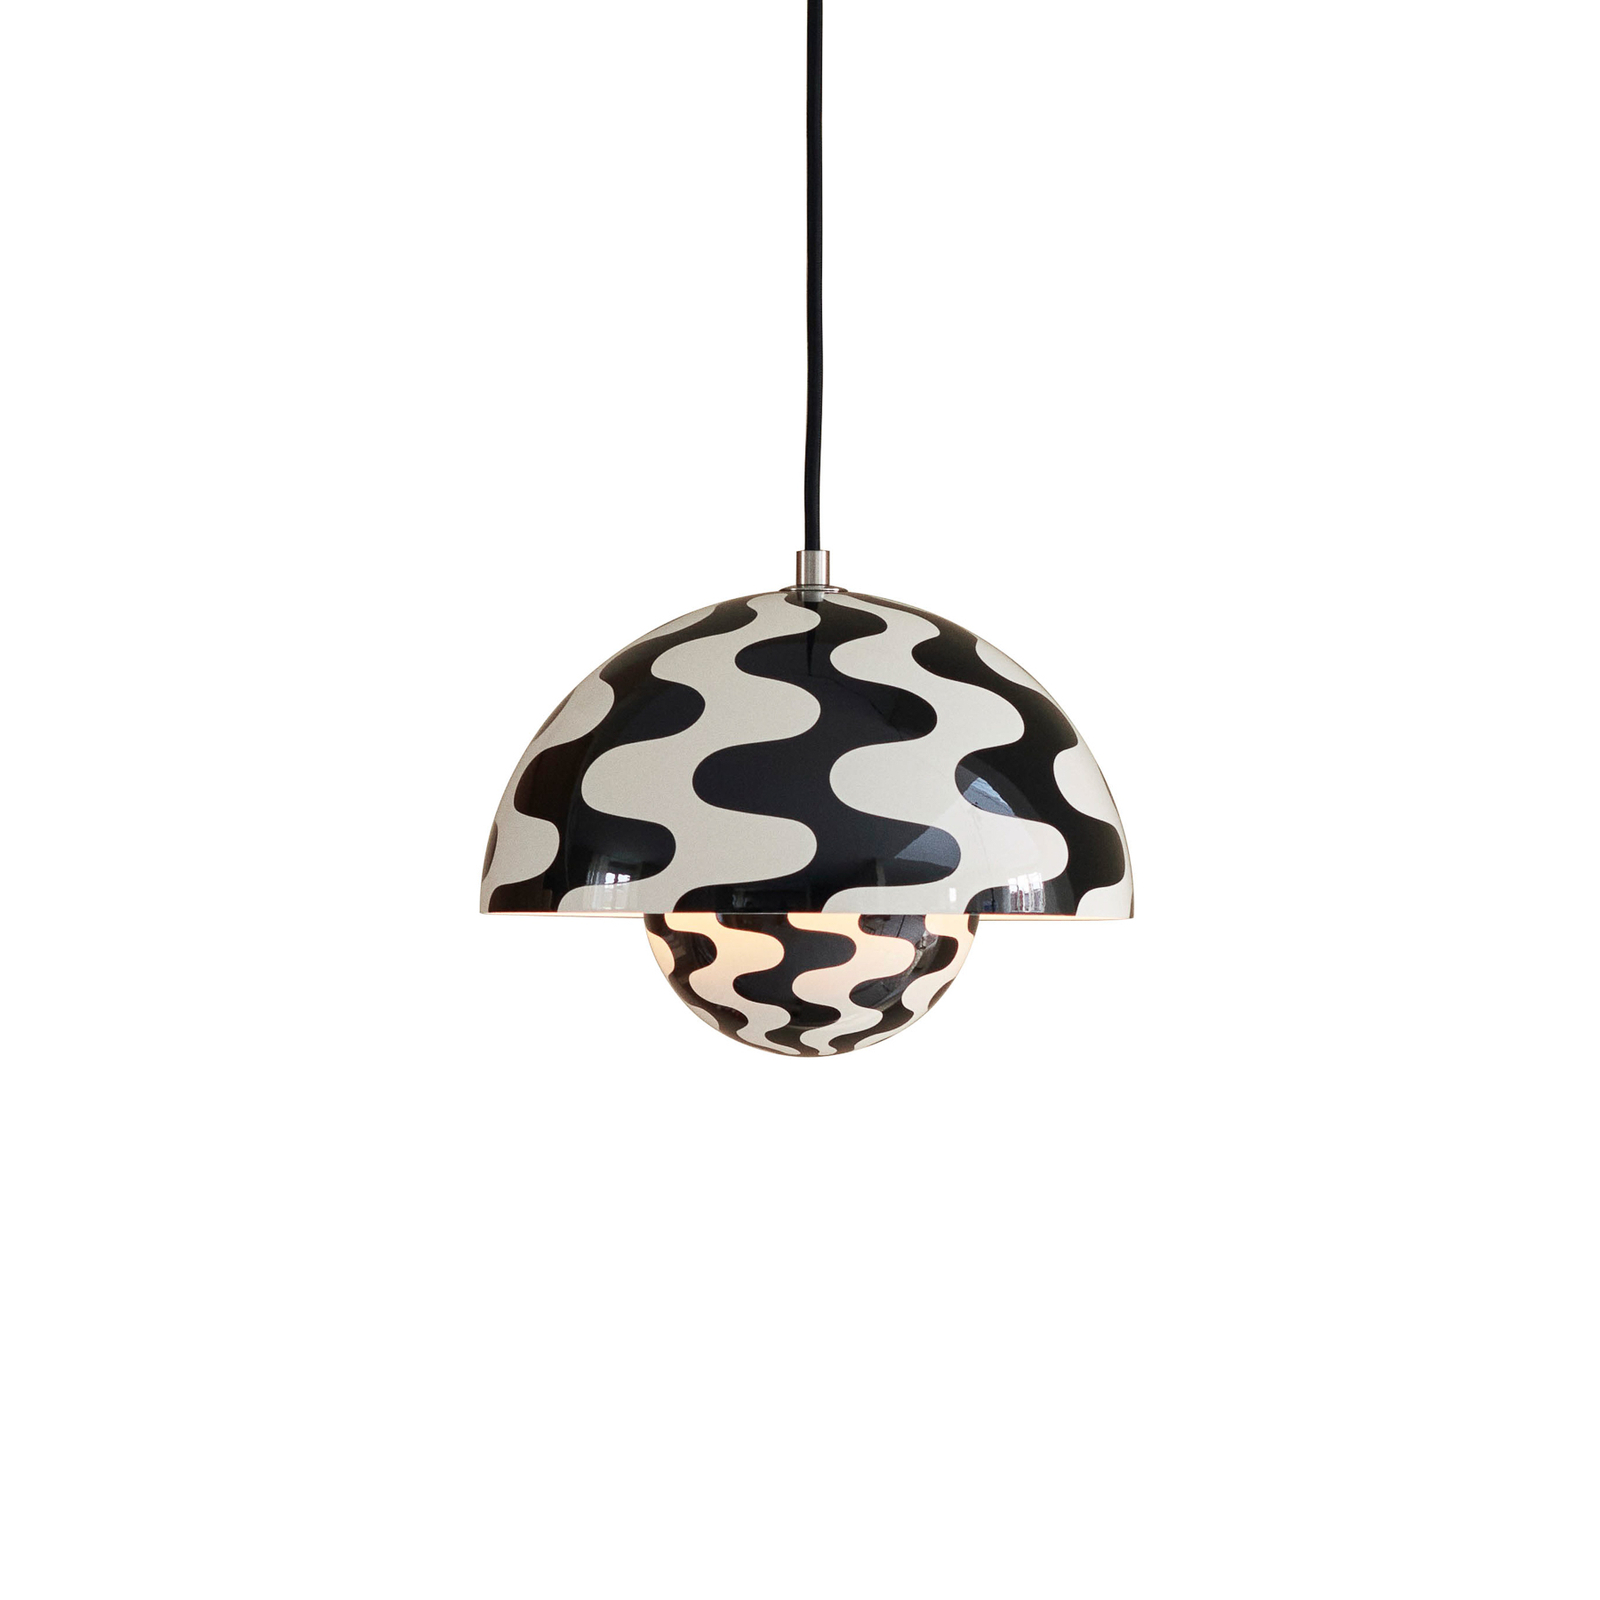 &Tradition hanglamp Bloempot VP1, Ø 23 cm, zwart/wit